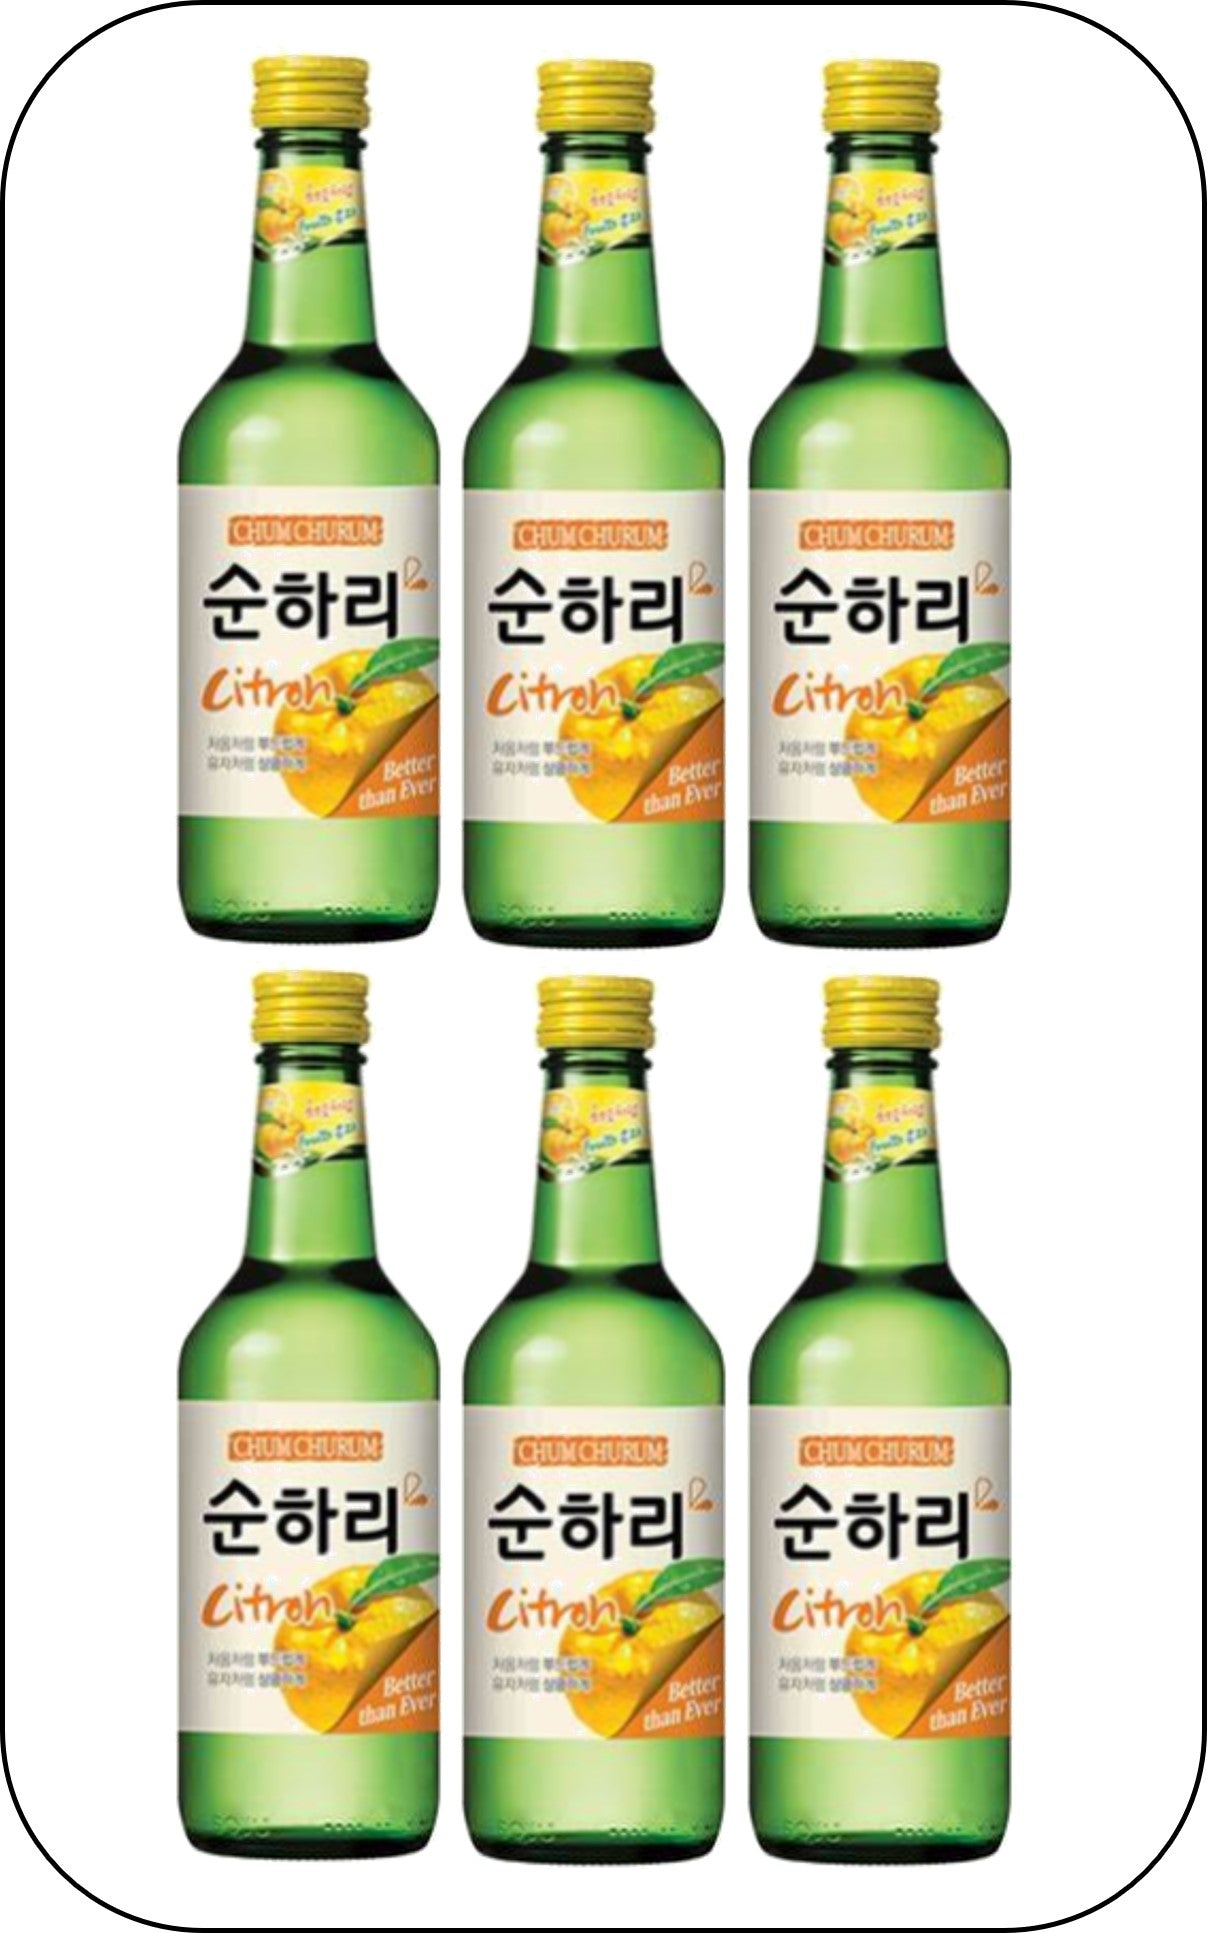 Chum Churum Korean Soju - Citron